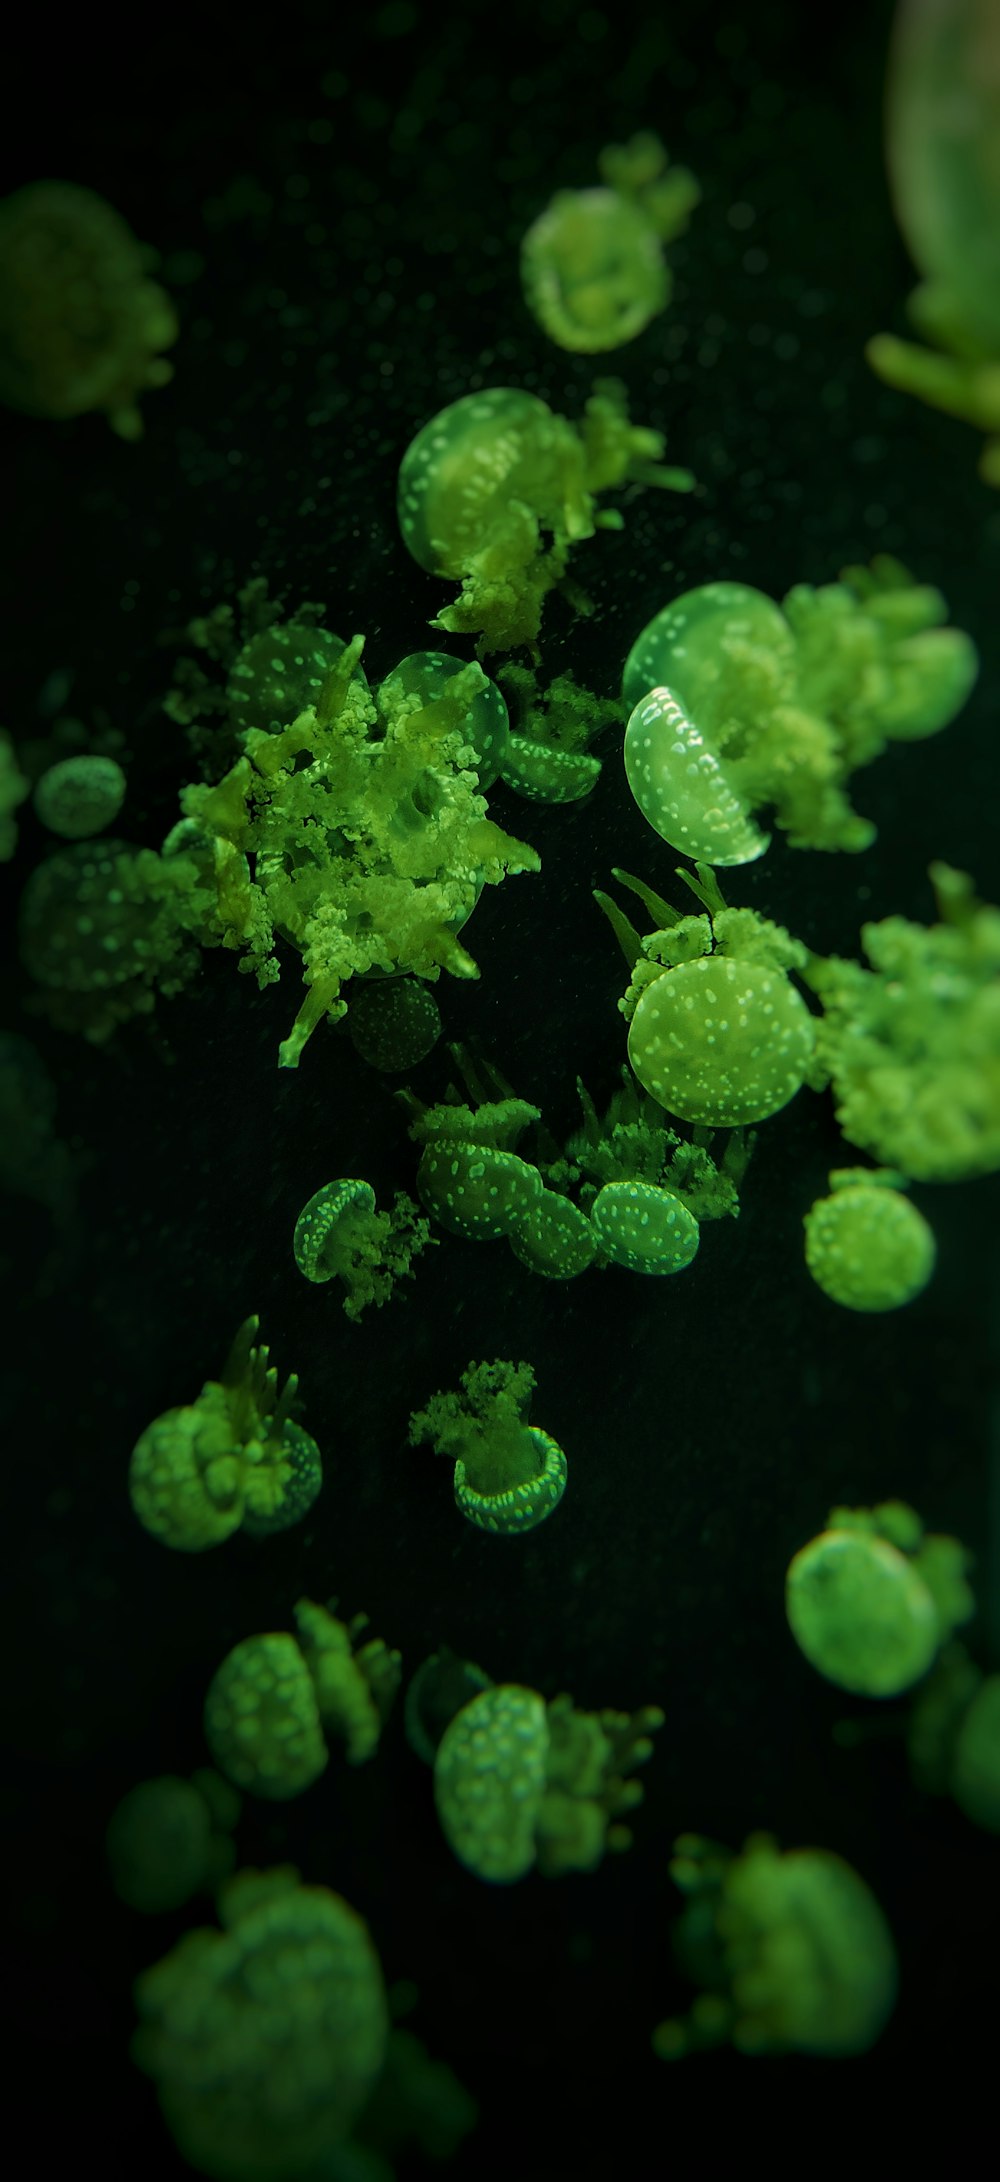 Un grupo de algas verdes flotando en un tanque